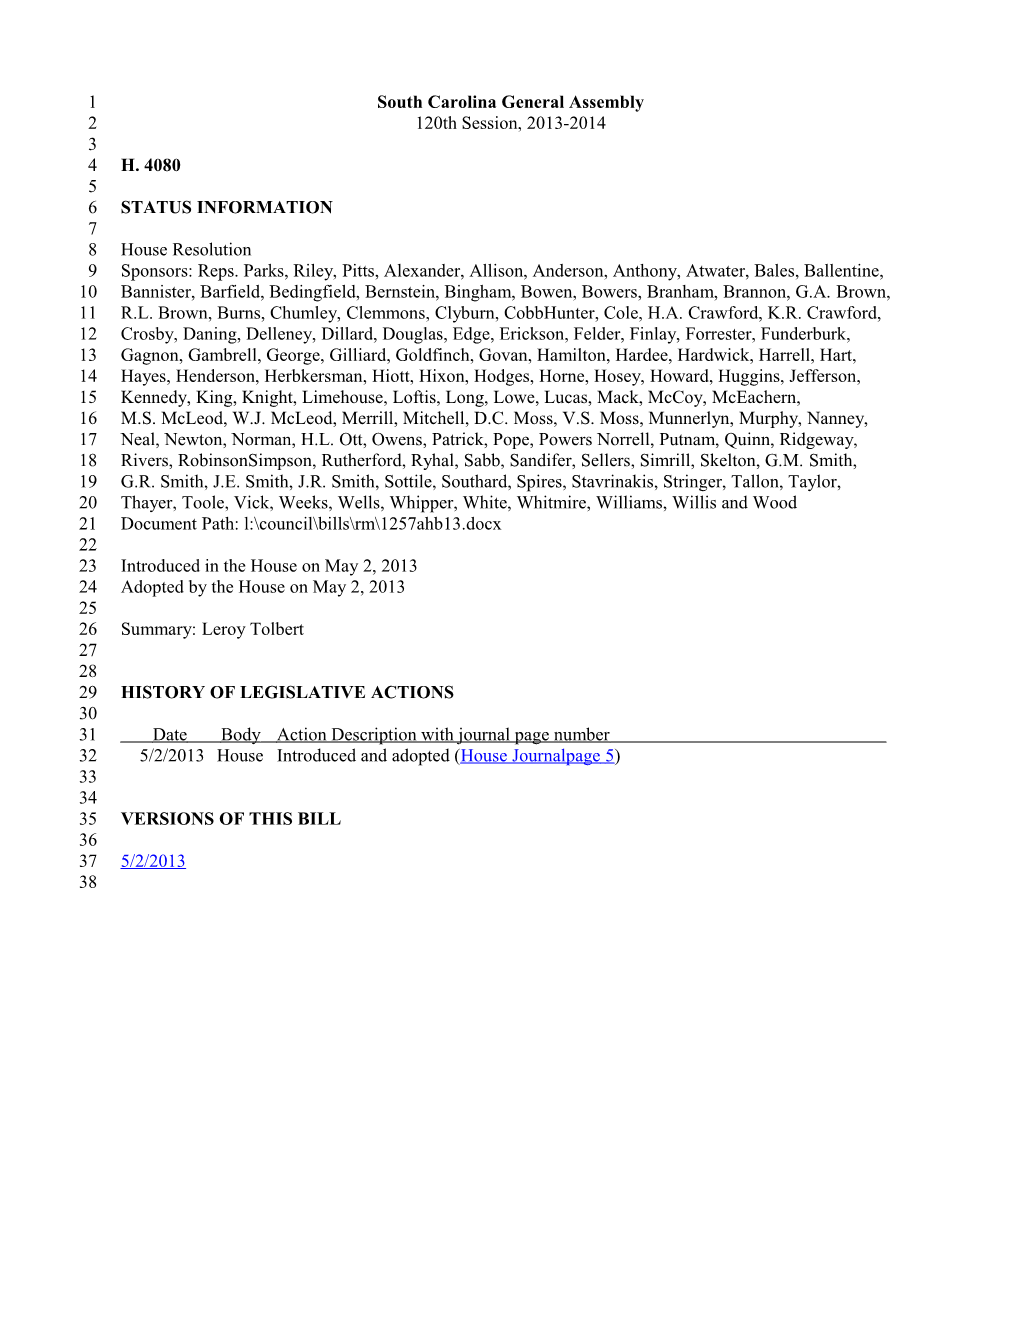 2013-2014 Bill 4080: Leroy Tolbert - South Carolina Legislature Online